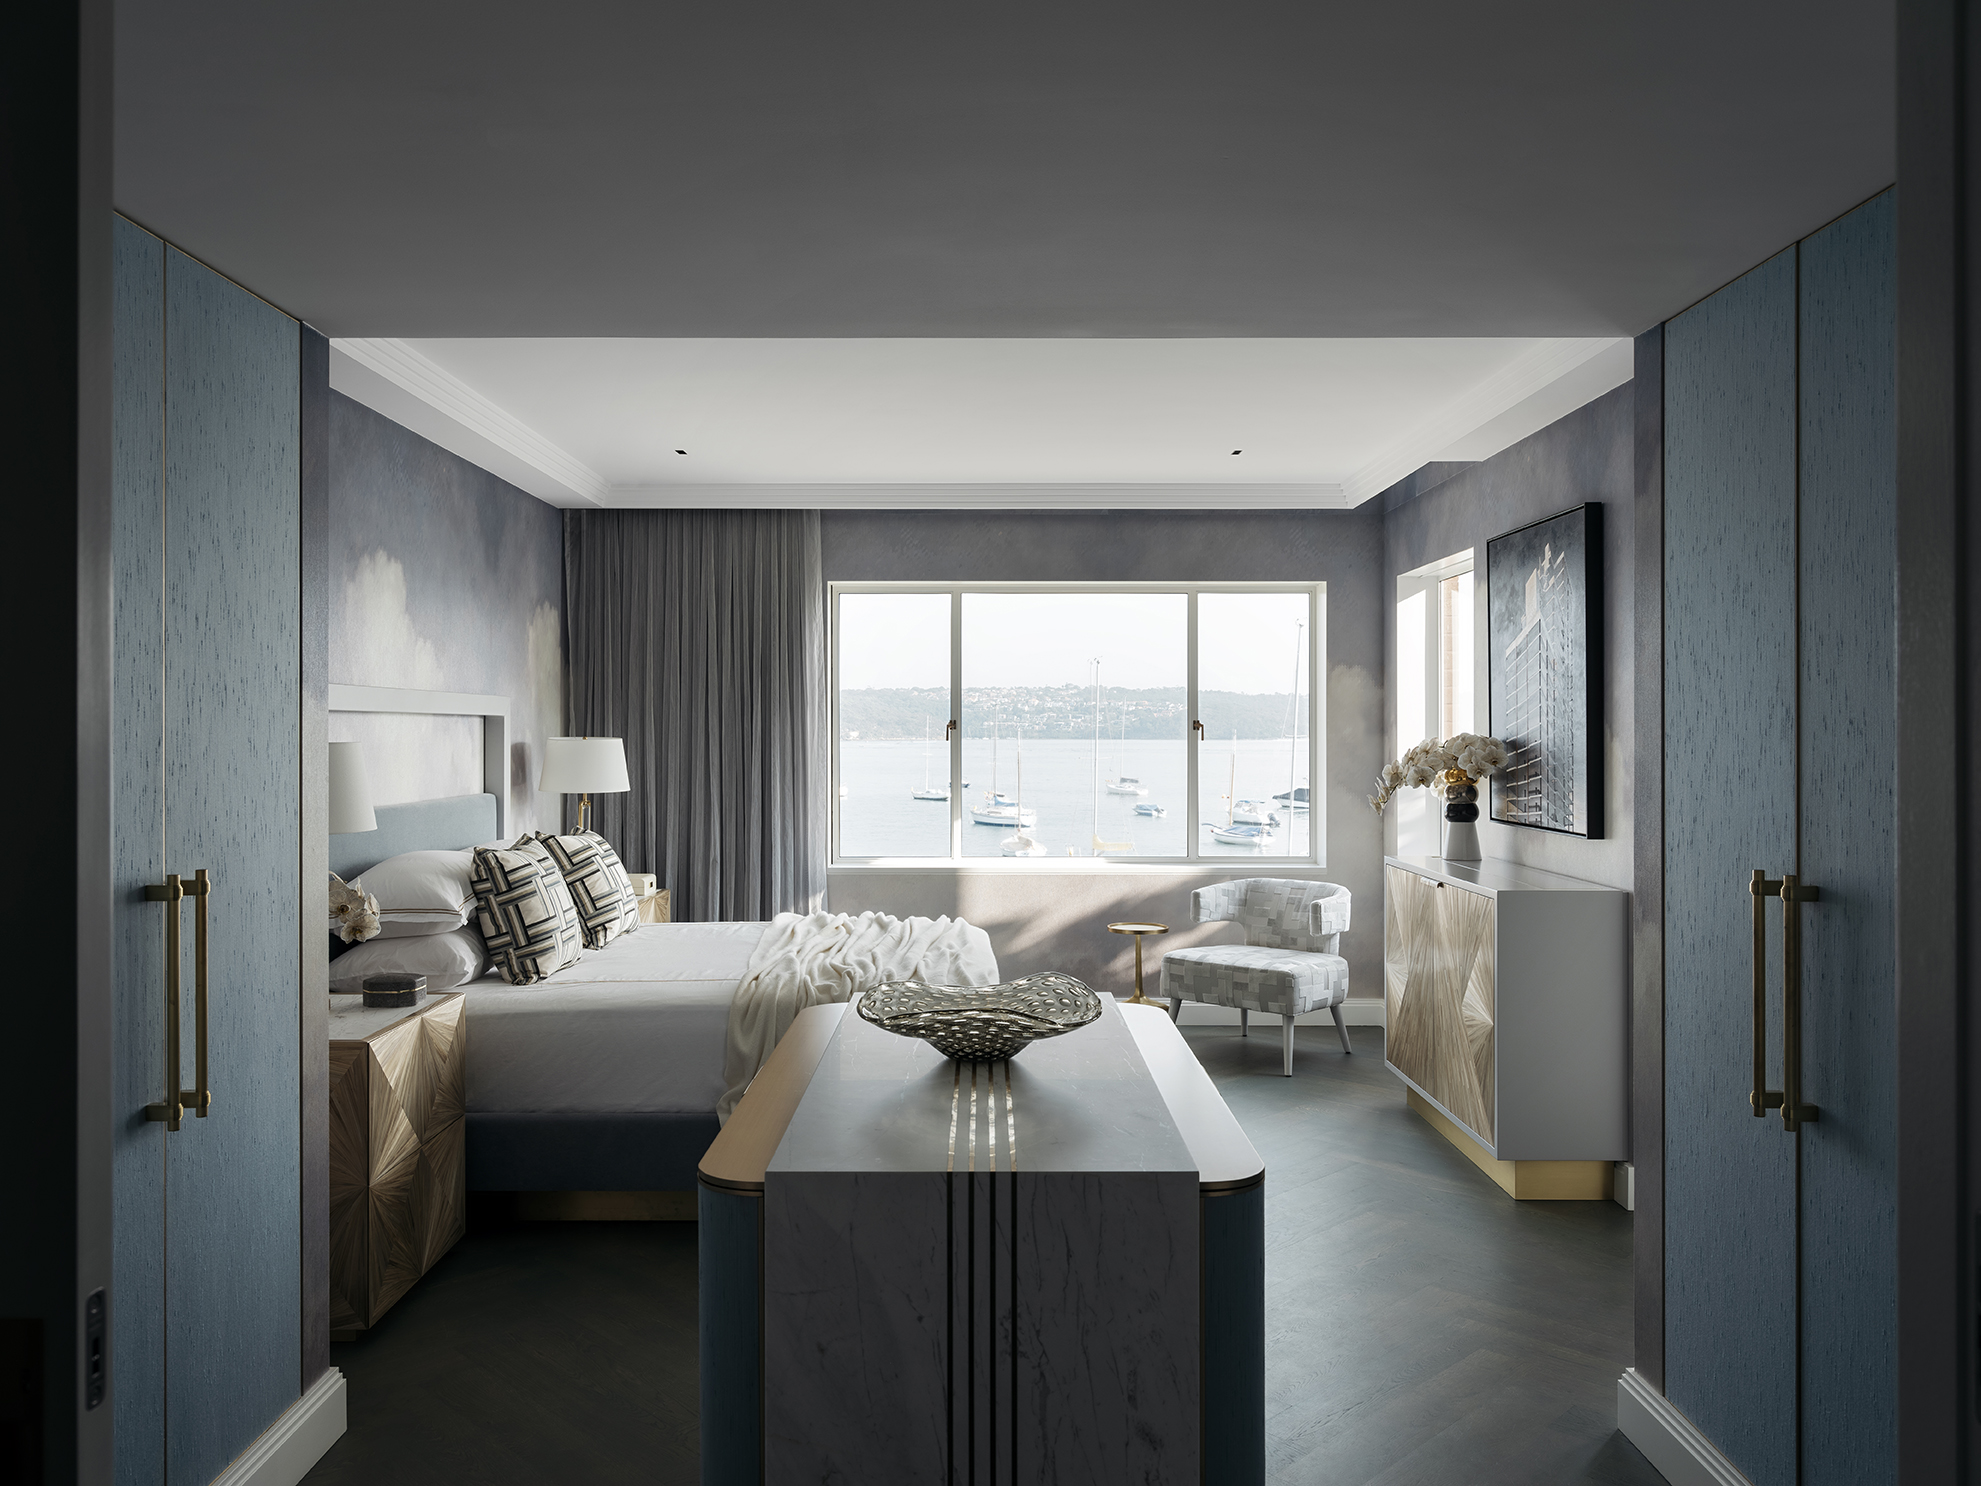 Blue bedroom renovation with herringbone timber floors and brass handles, by Sydney interior designers, Brendan Wong Design